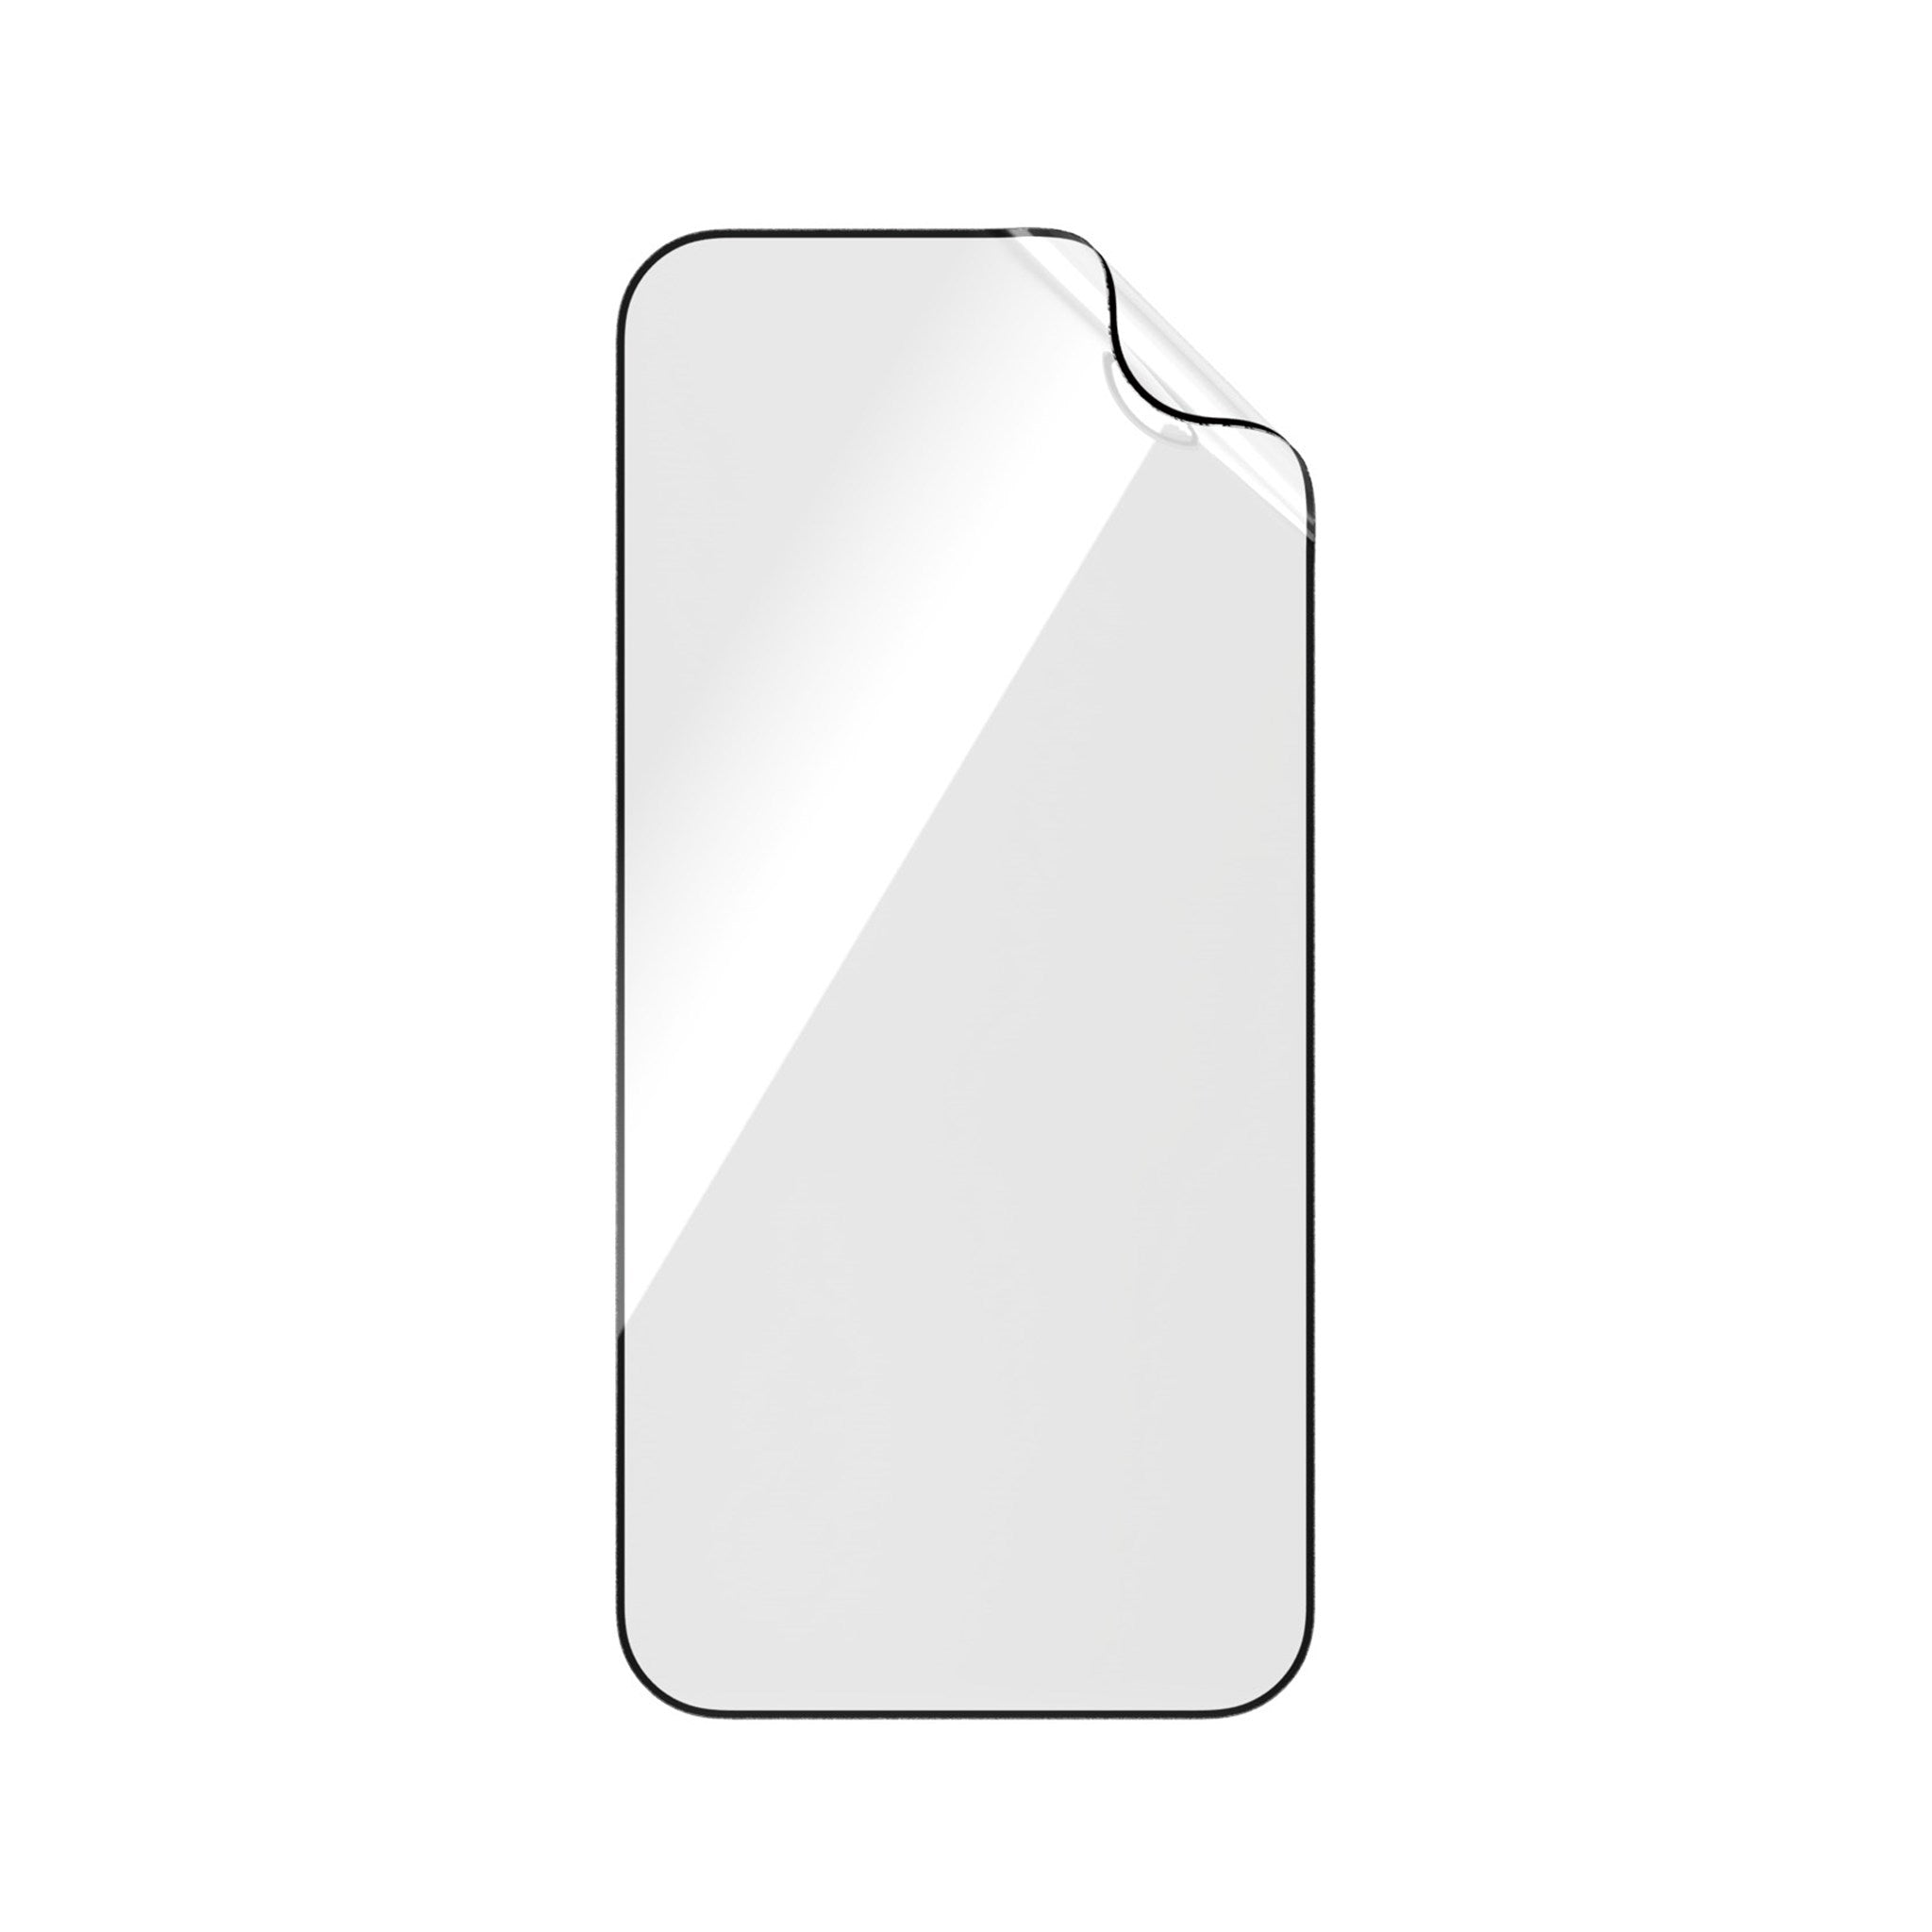 PANZERGLASS MATRIX Ultra-Wide Fit Displayschutz(für Pro) 15 iPhone Apple